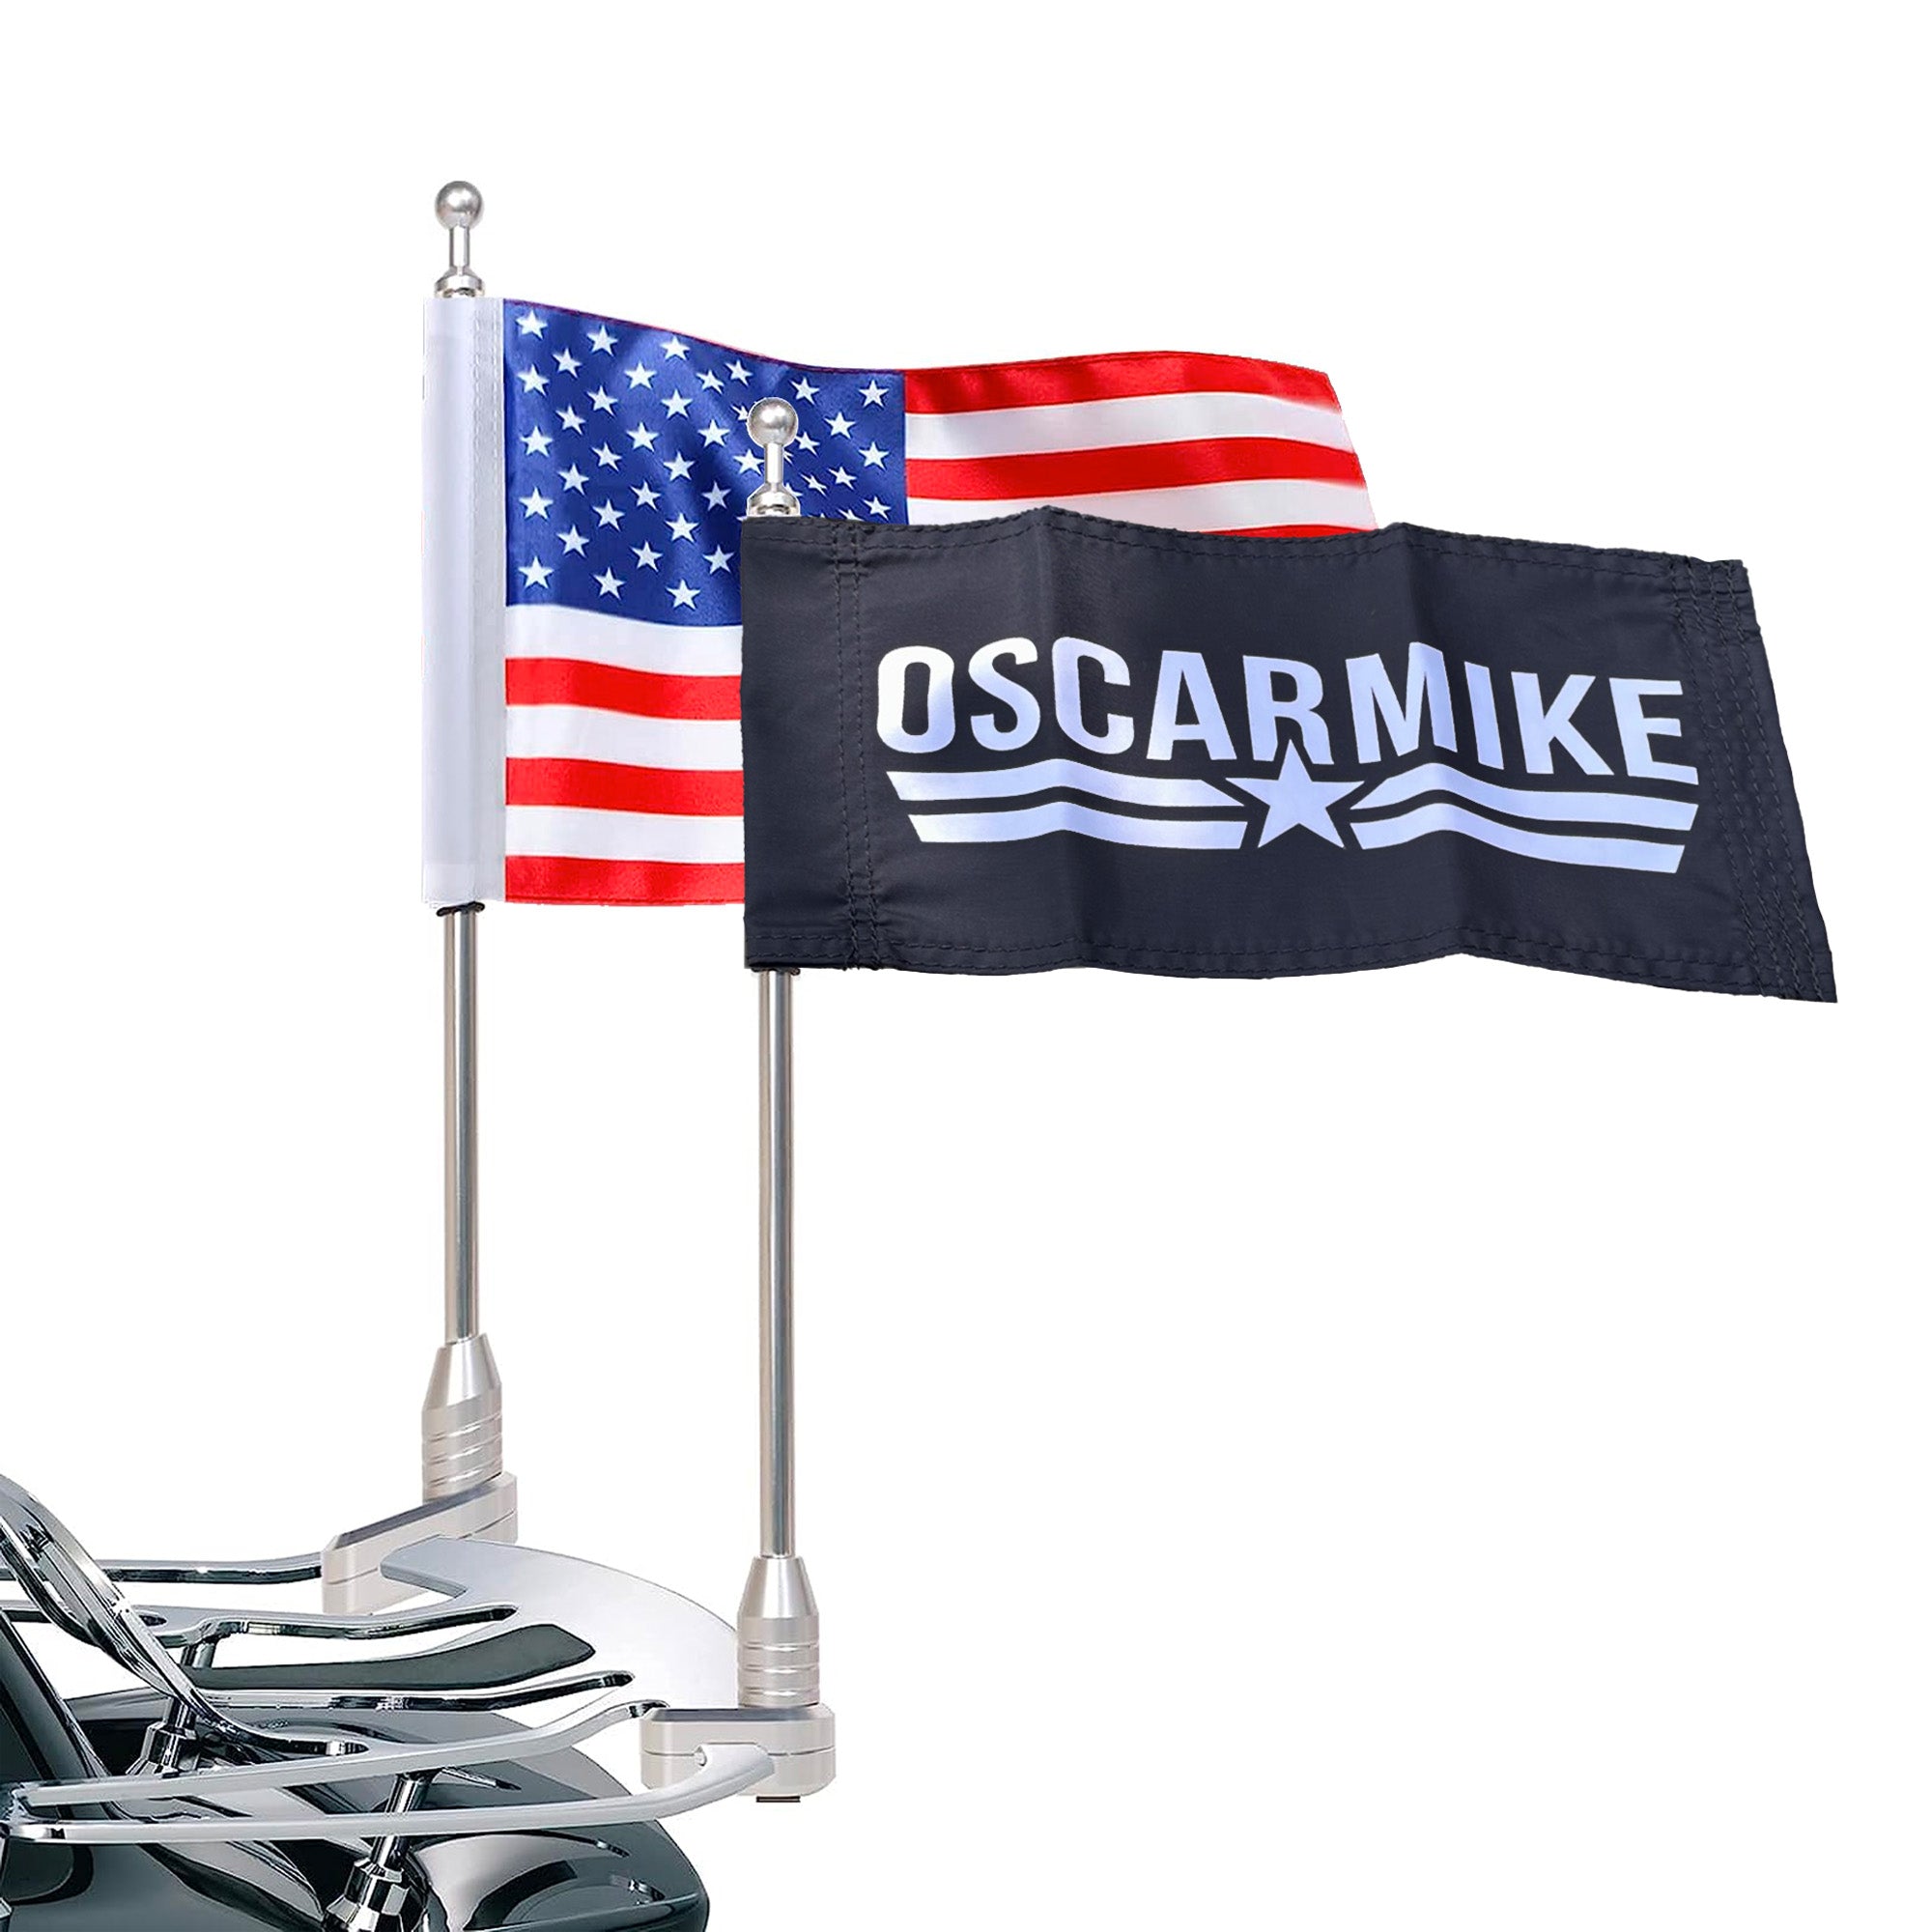 Oscar Mike Bike Flag